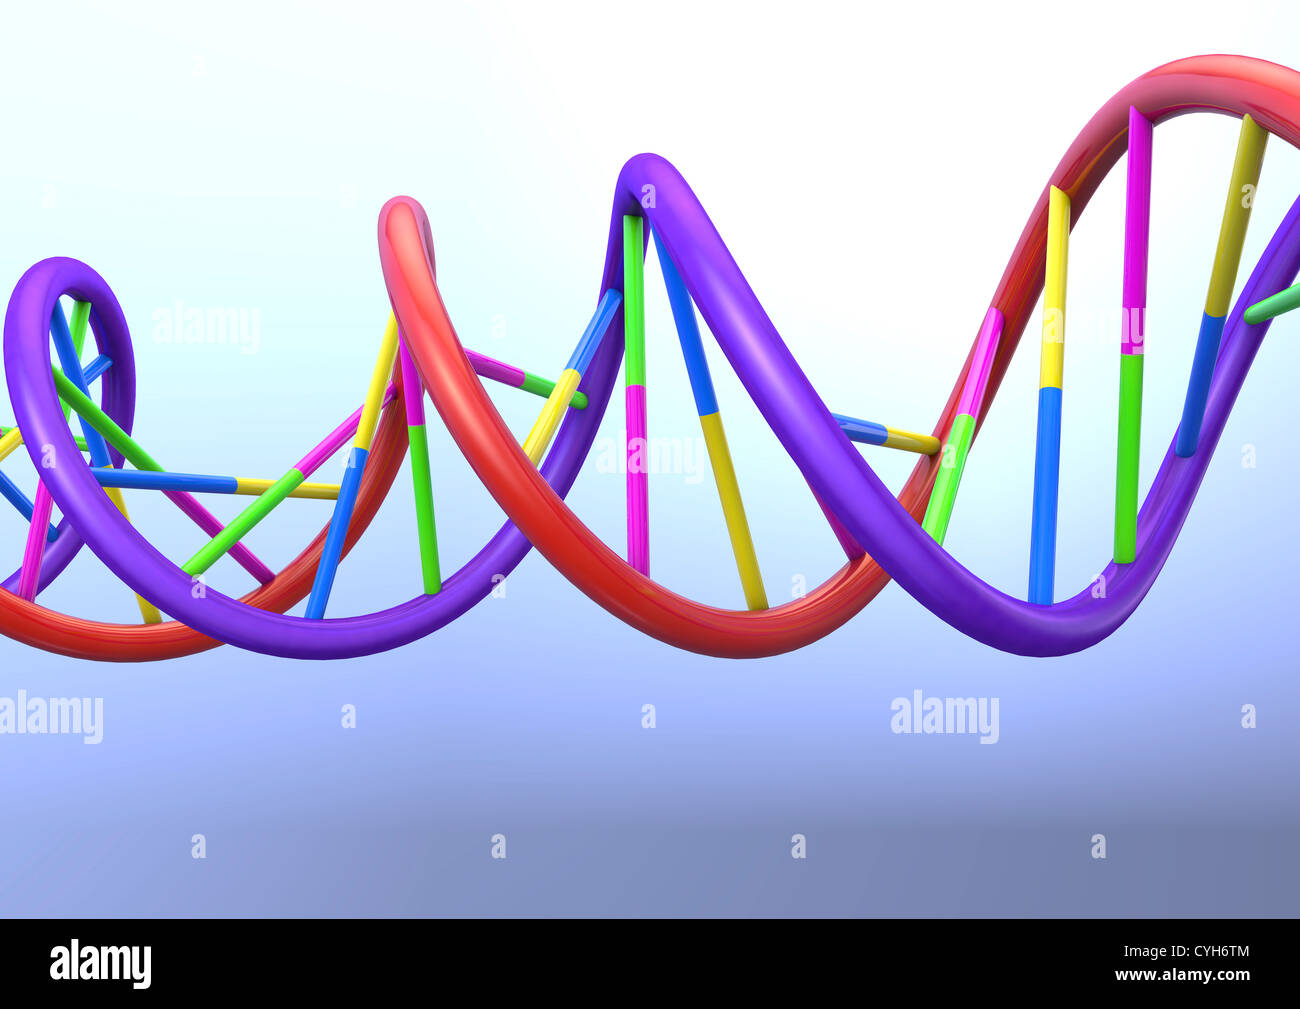 DNA Double Helix Model - 3D render - Concept image Stock Photo